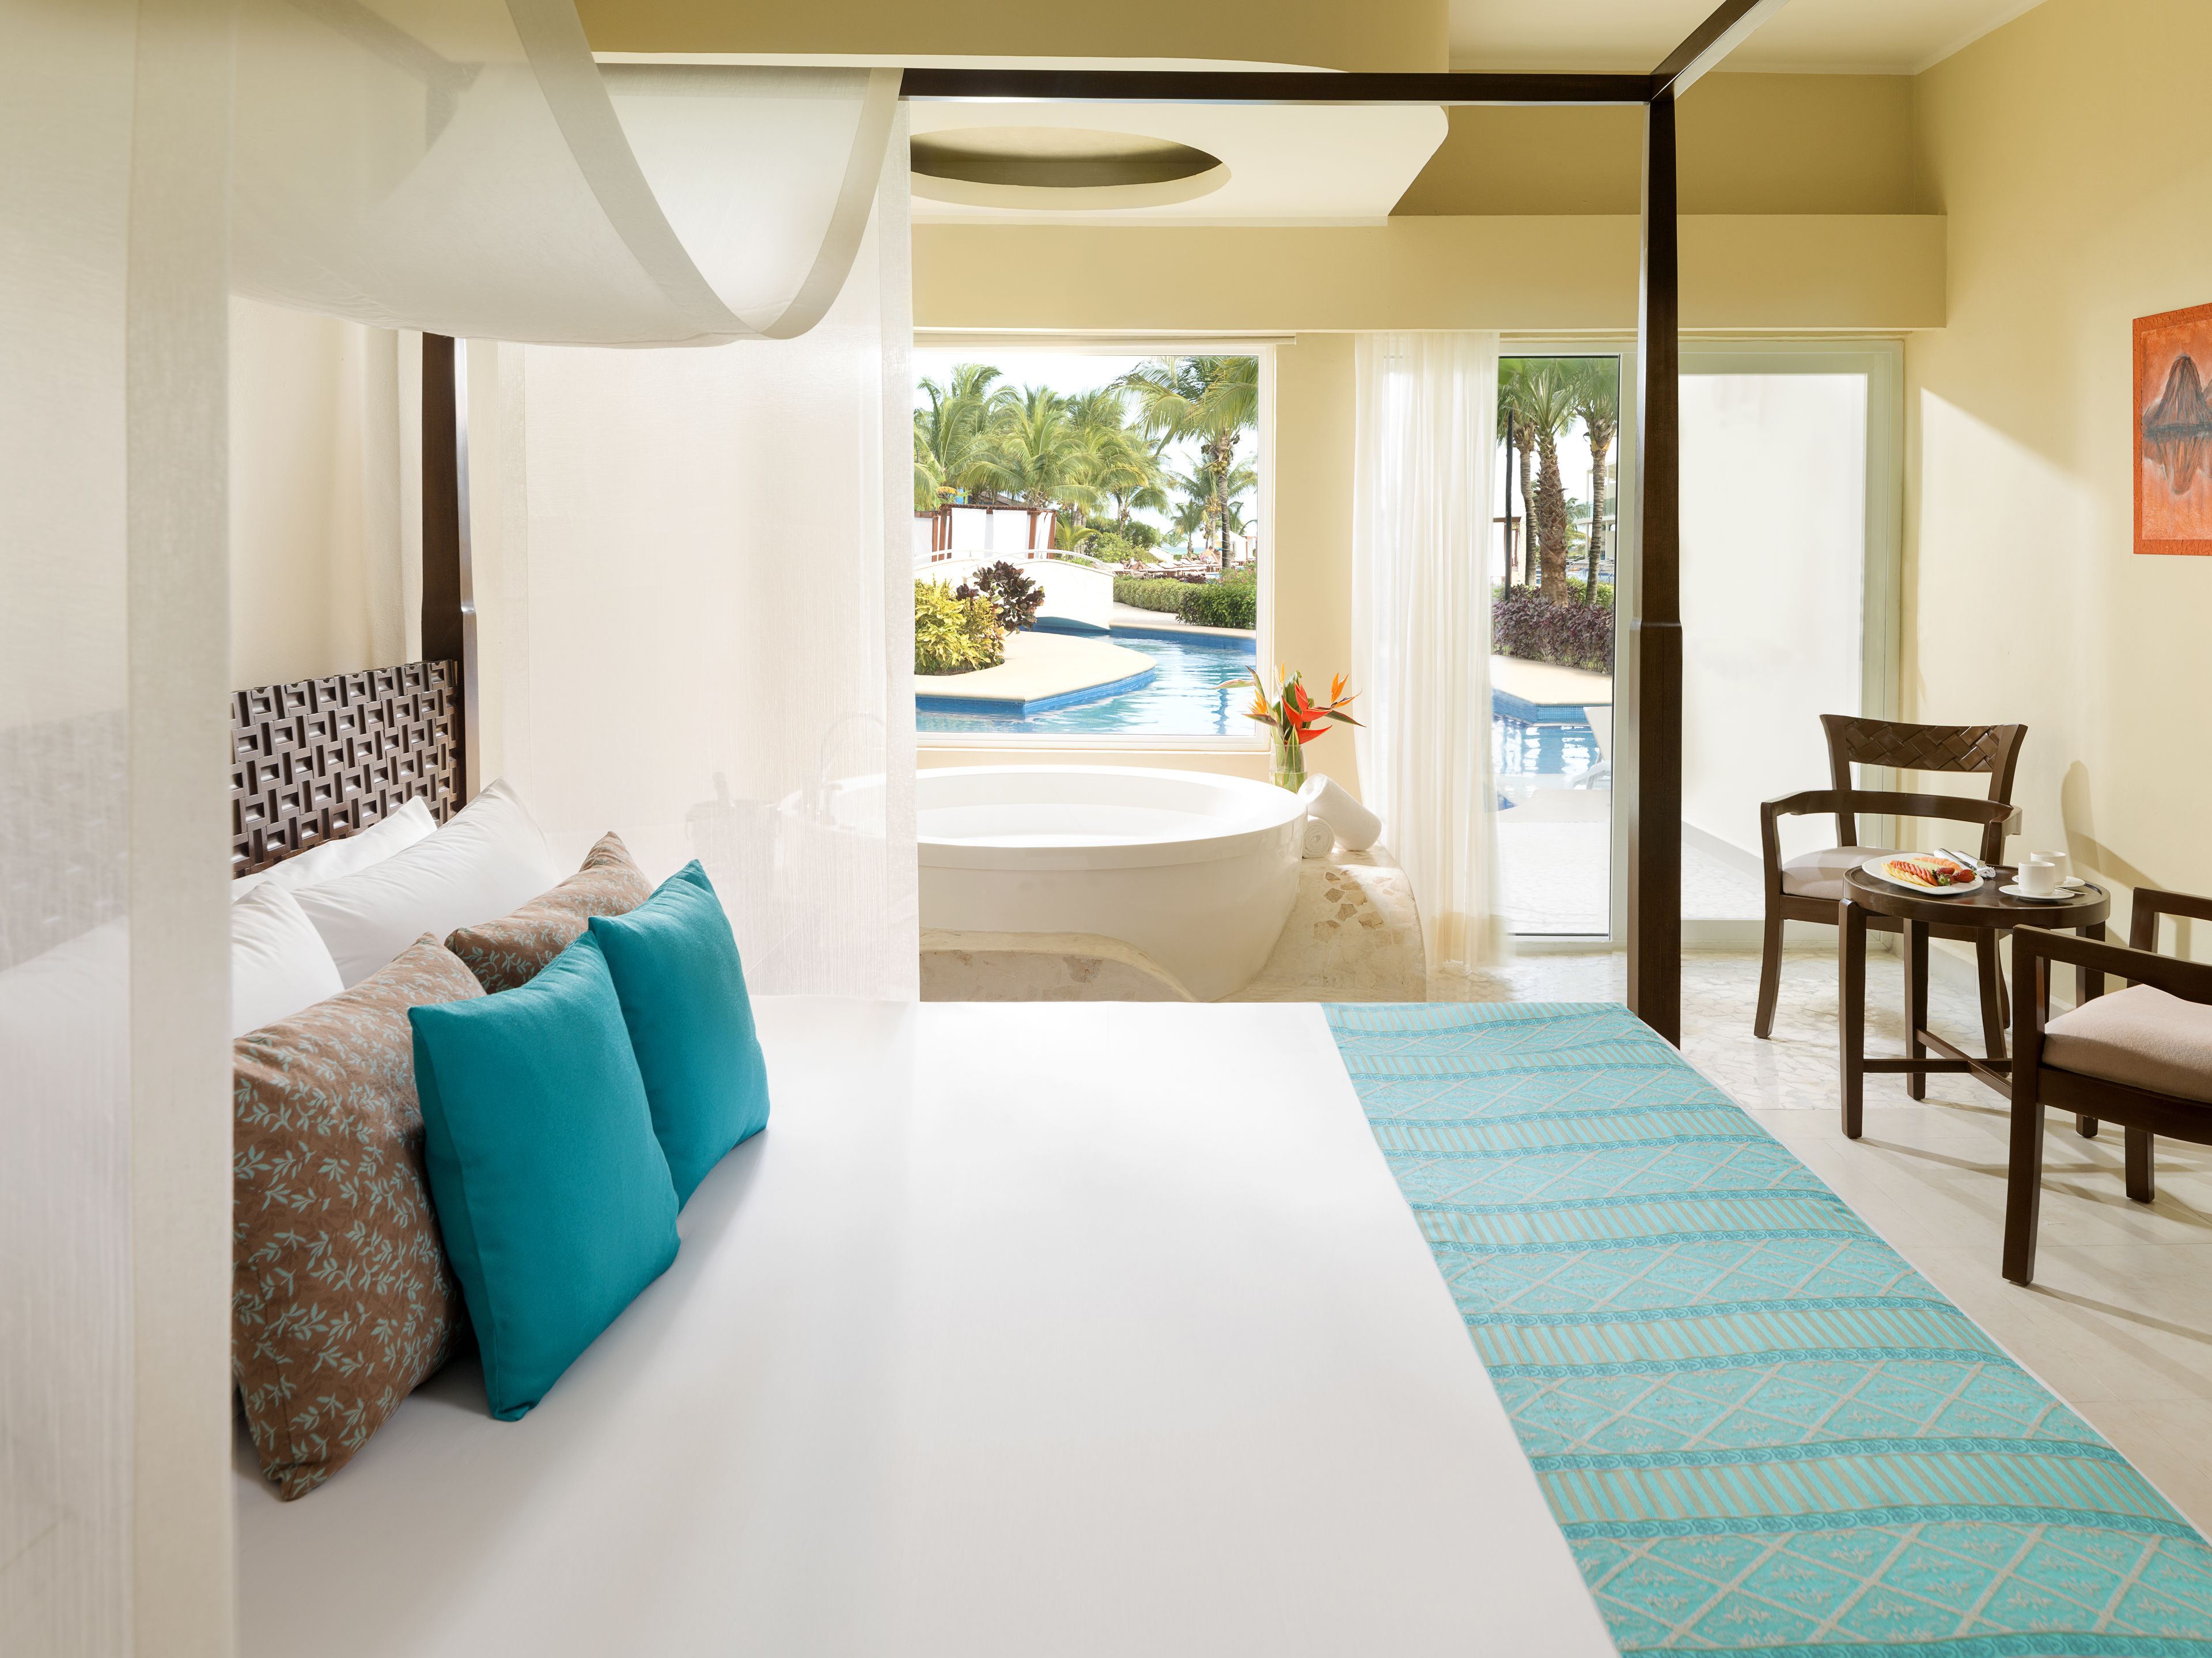 Azul Beach Resort Riviera Cancun by Karisma